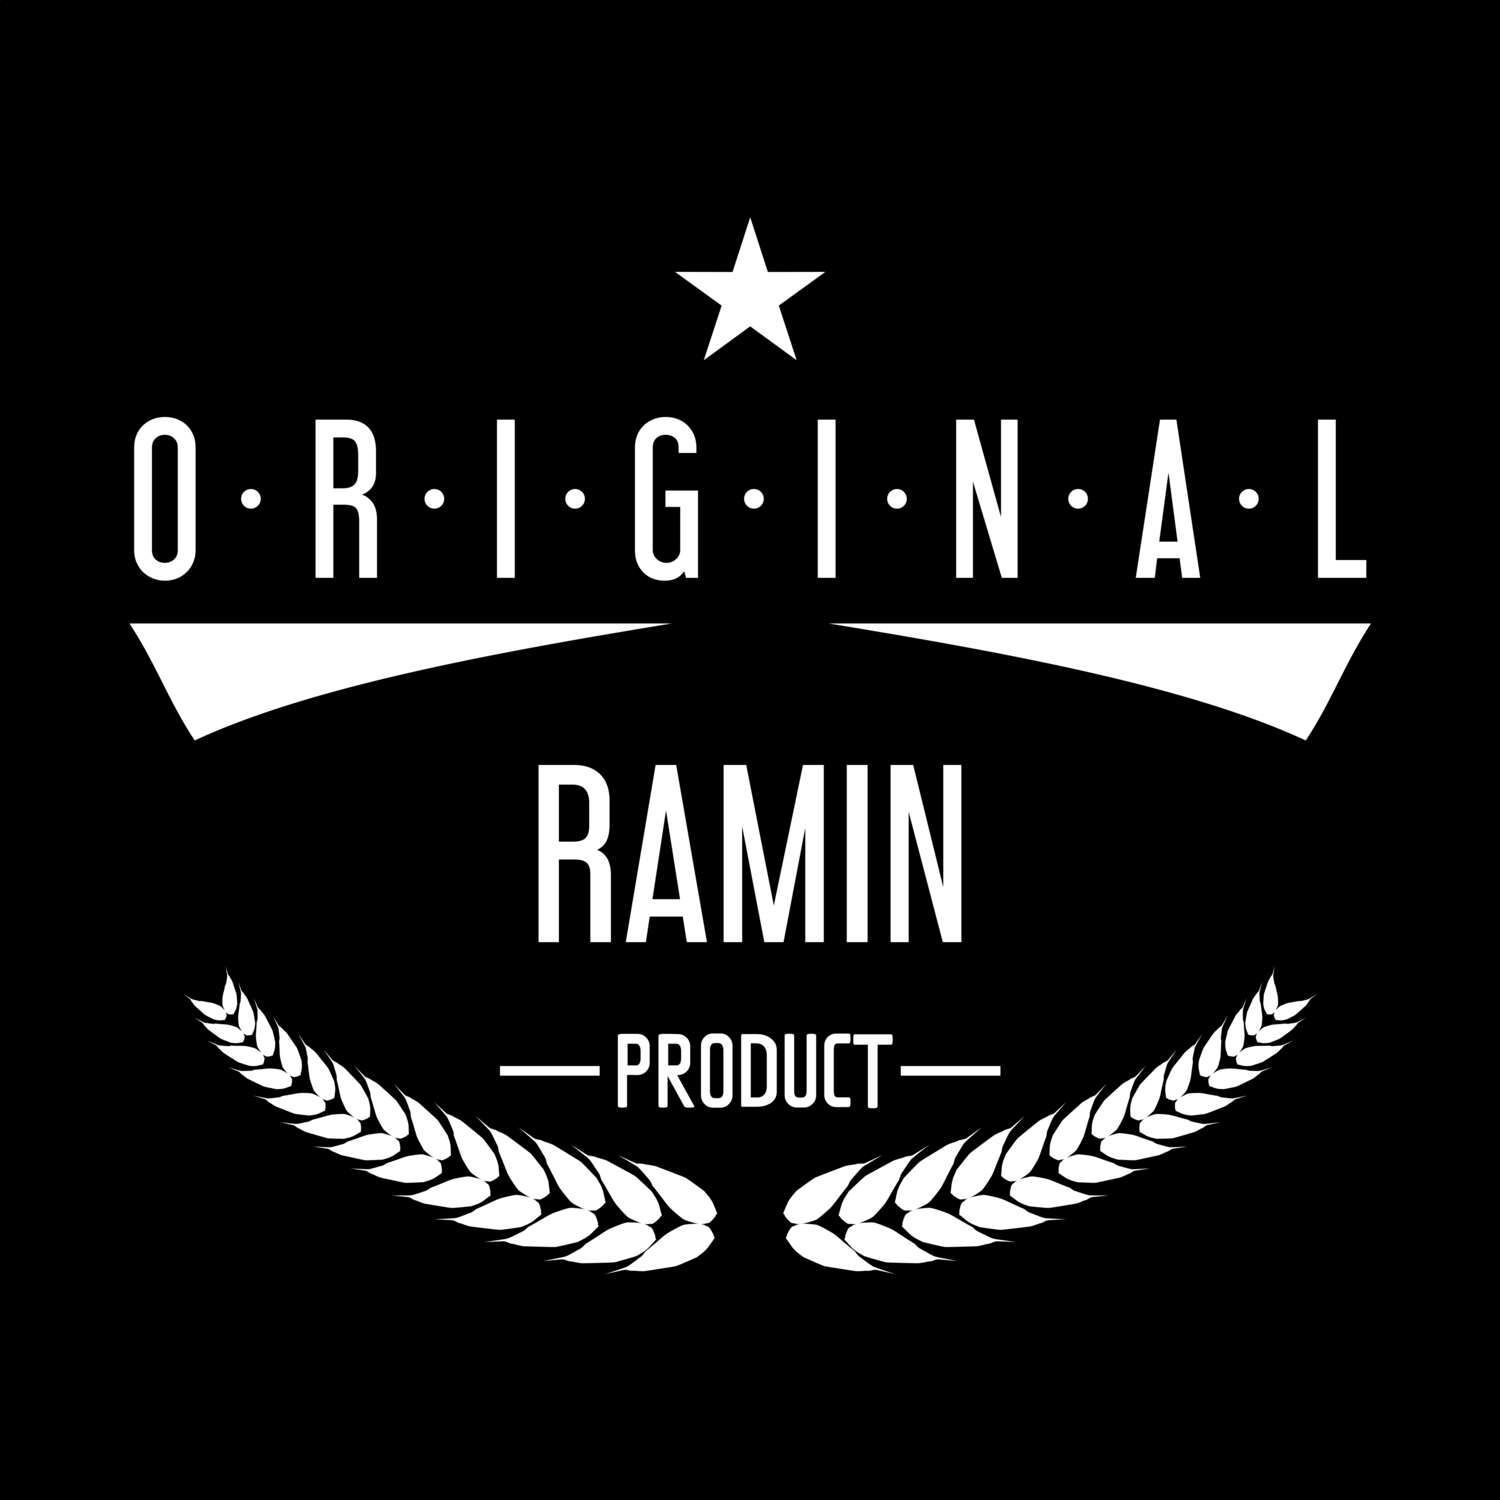 Ramin T-Shirt »Original Product«